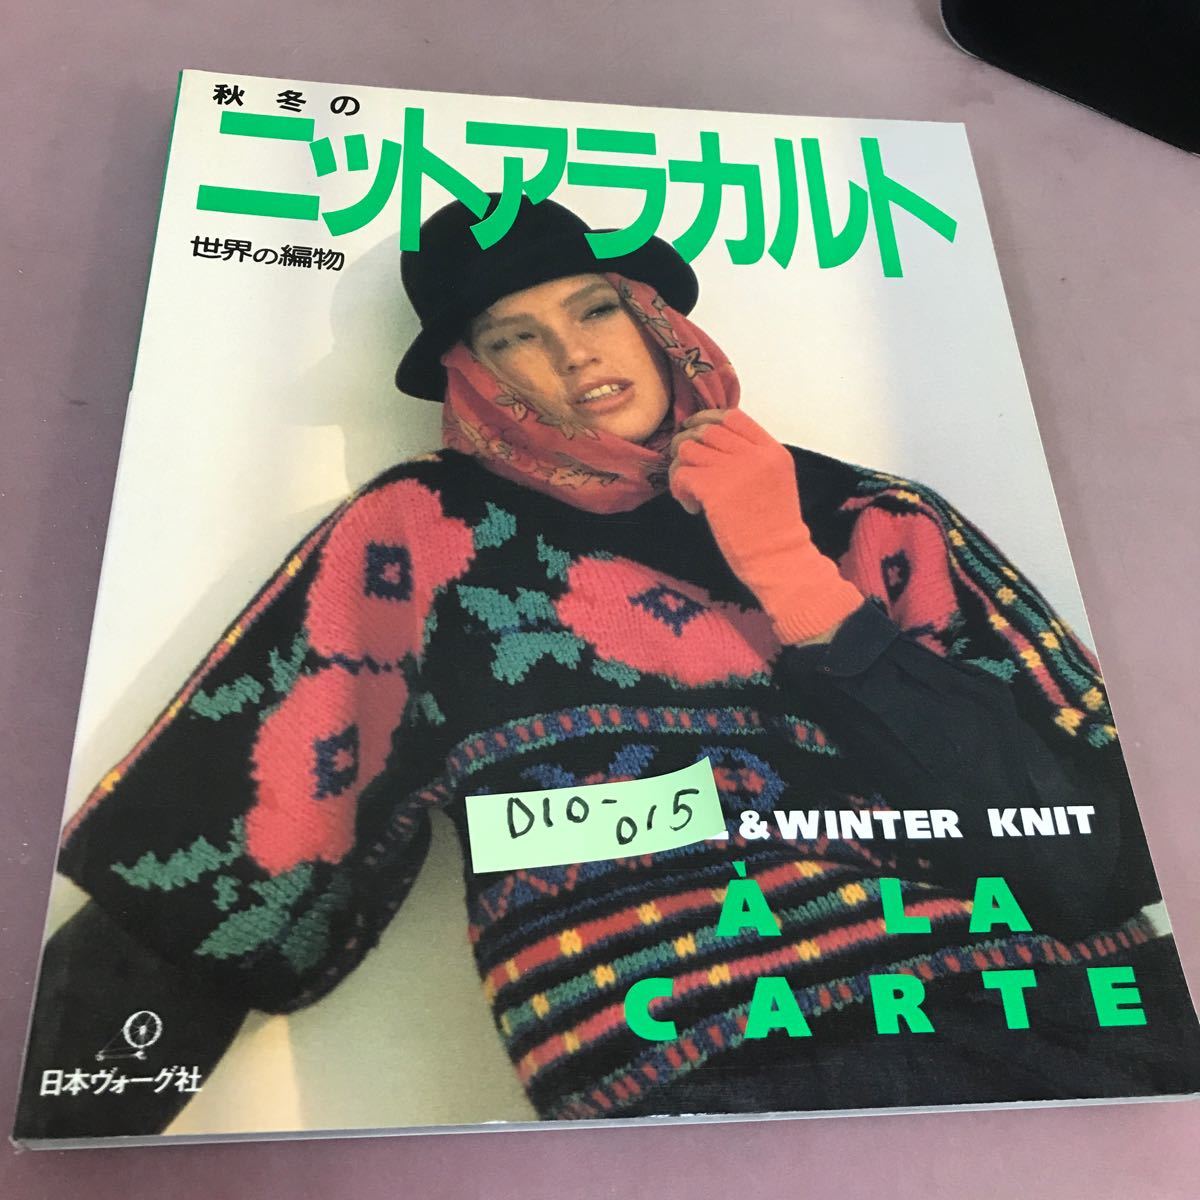 D10-015 秋冬のニットアラカルト 世界の編物 日本ヴォーグ社